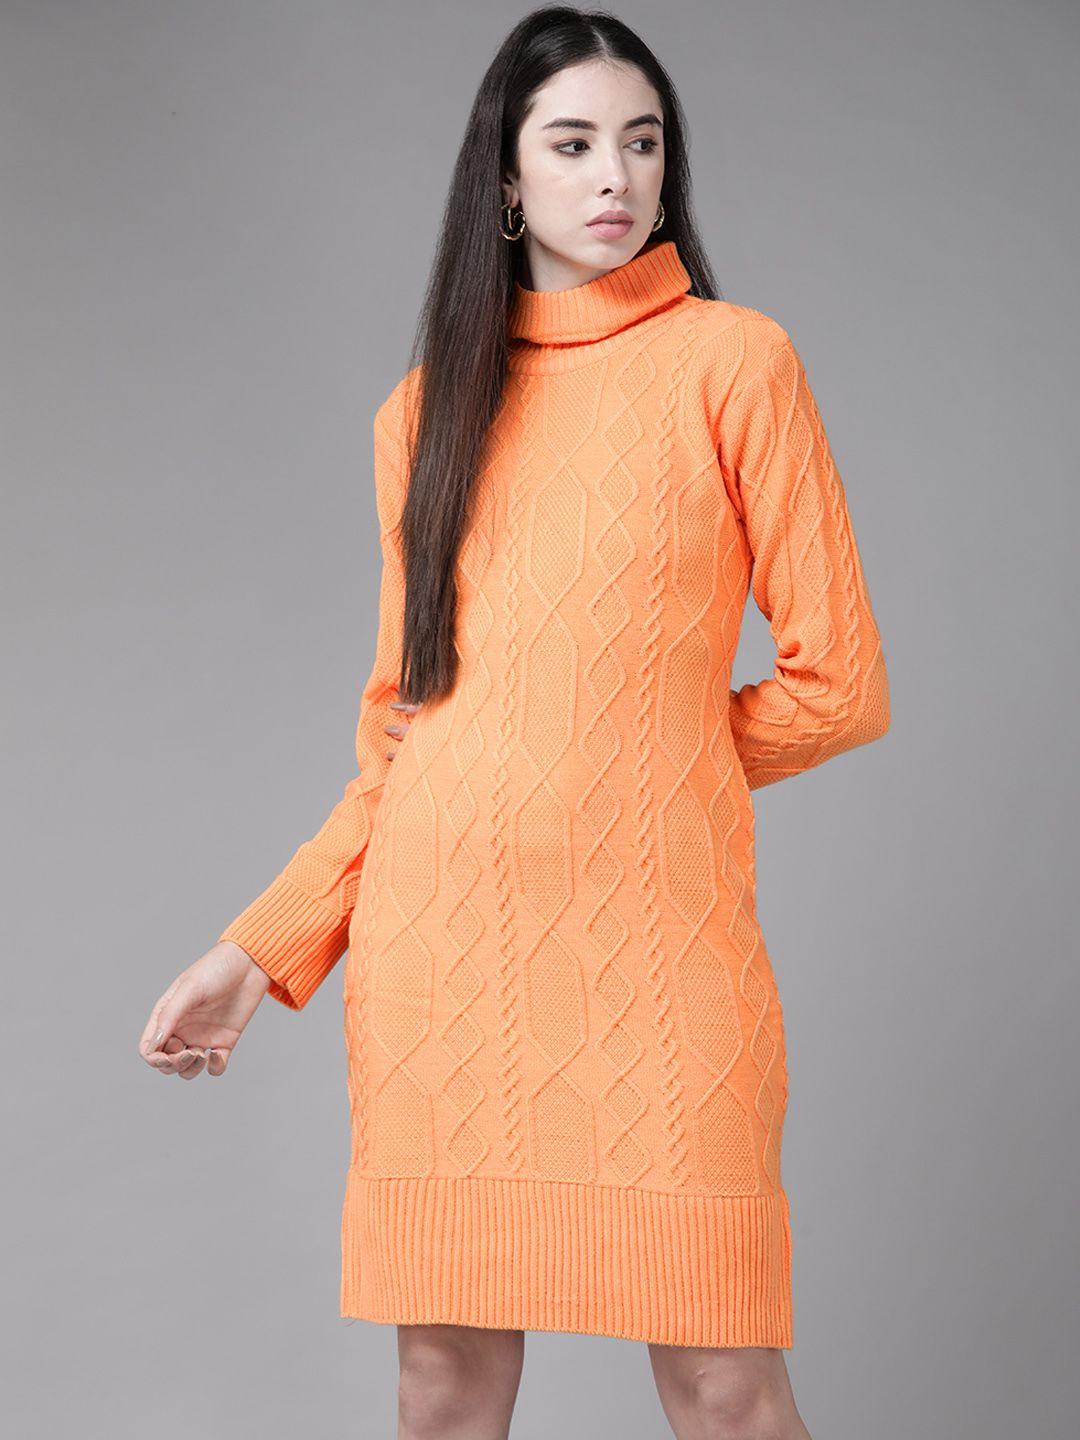 the dry state orange jumper dress